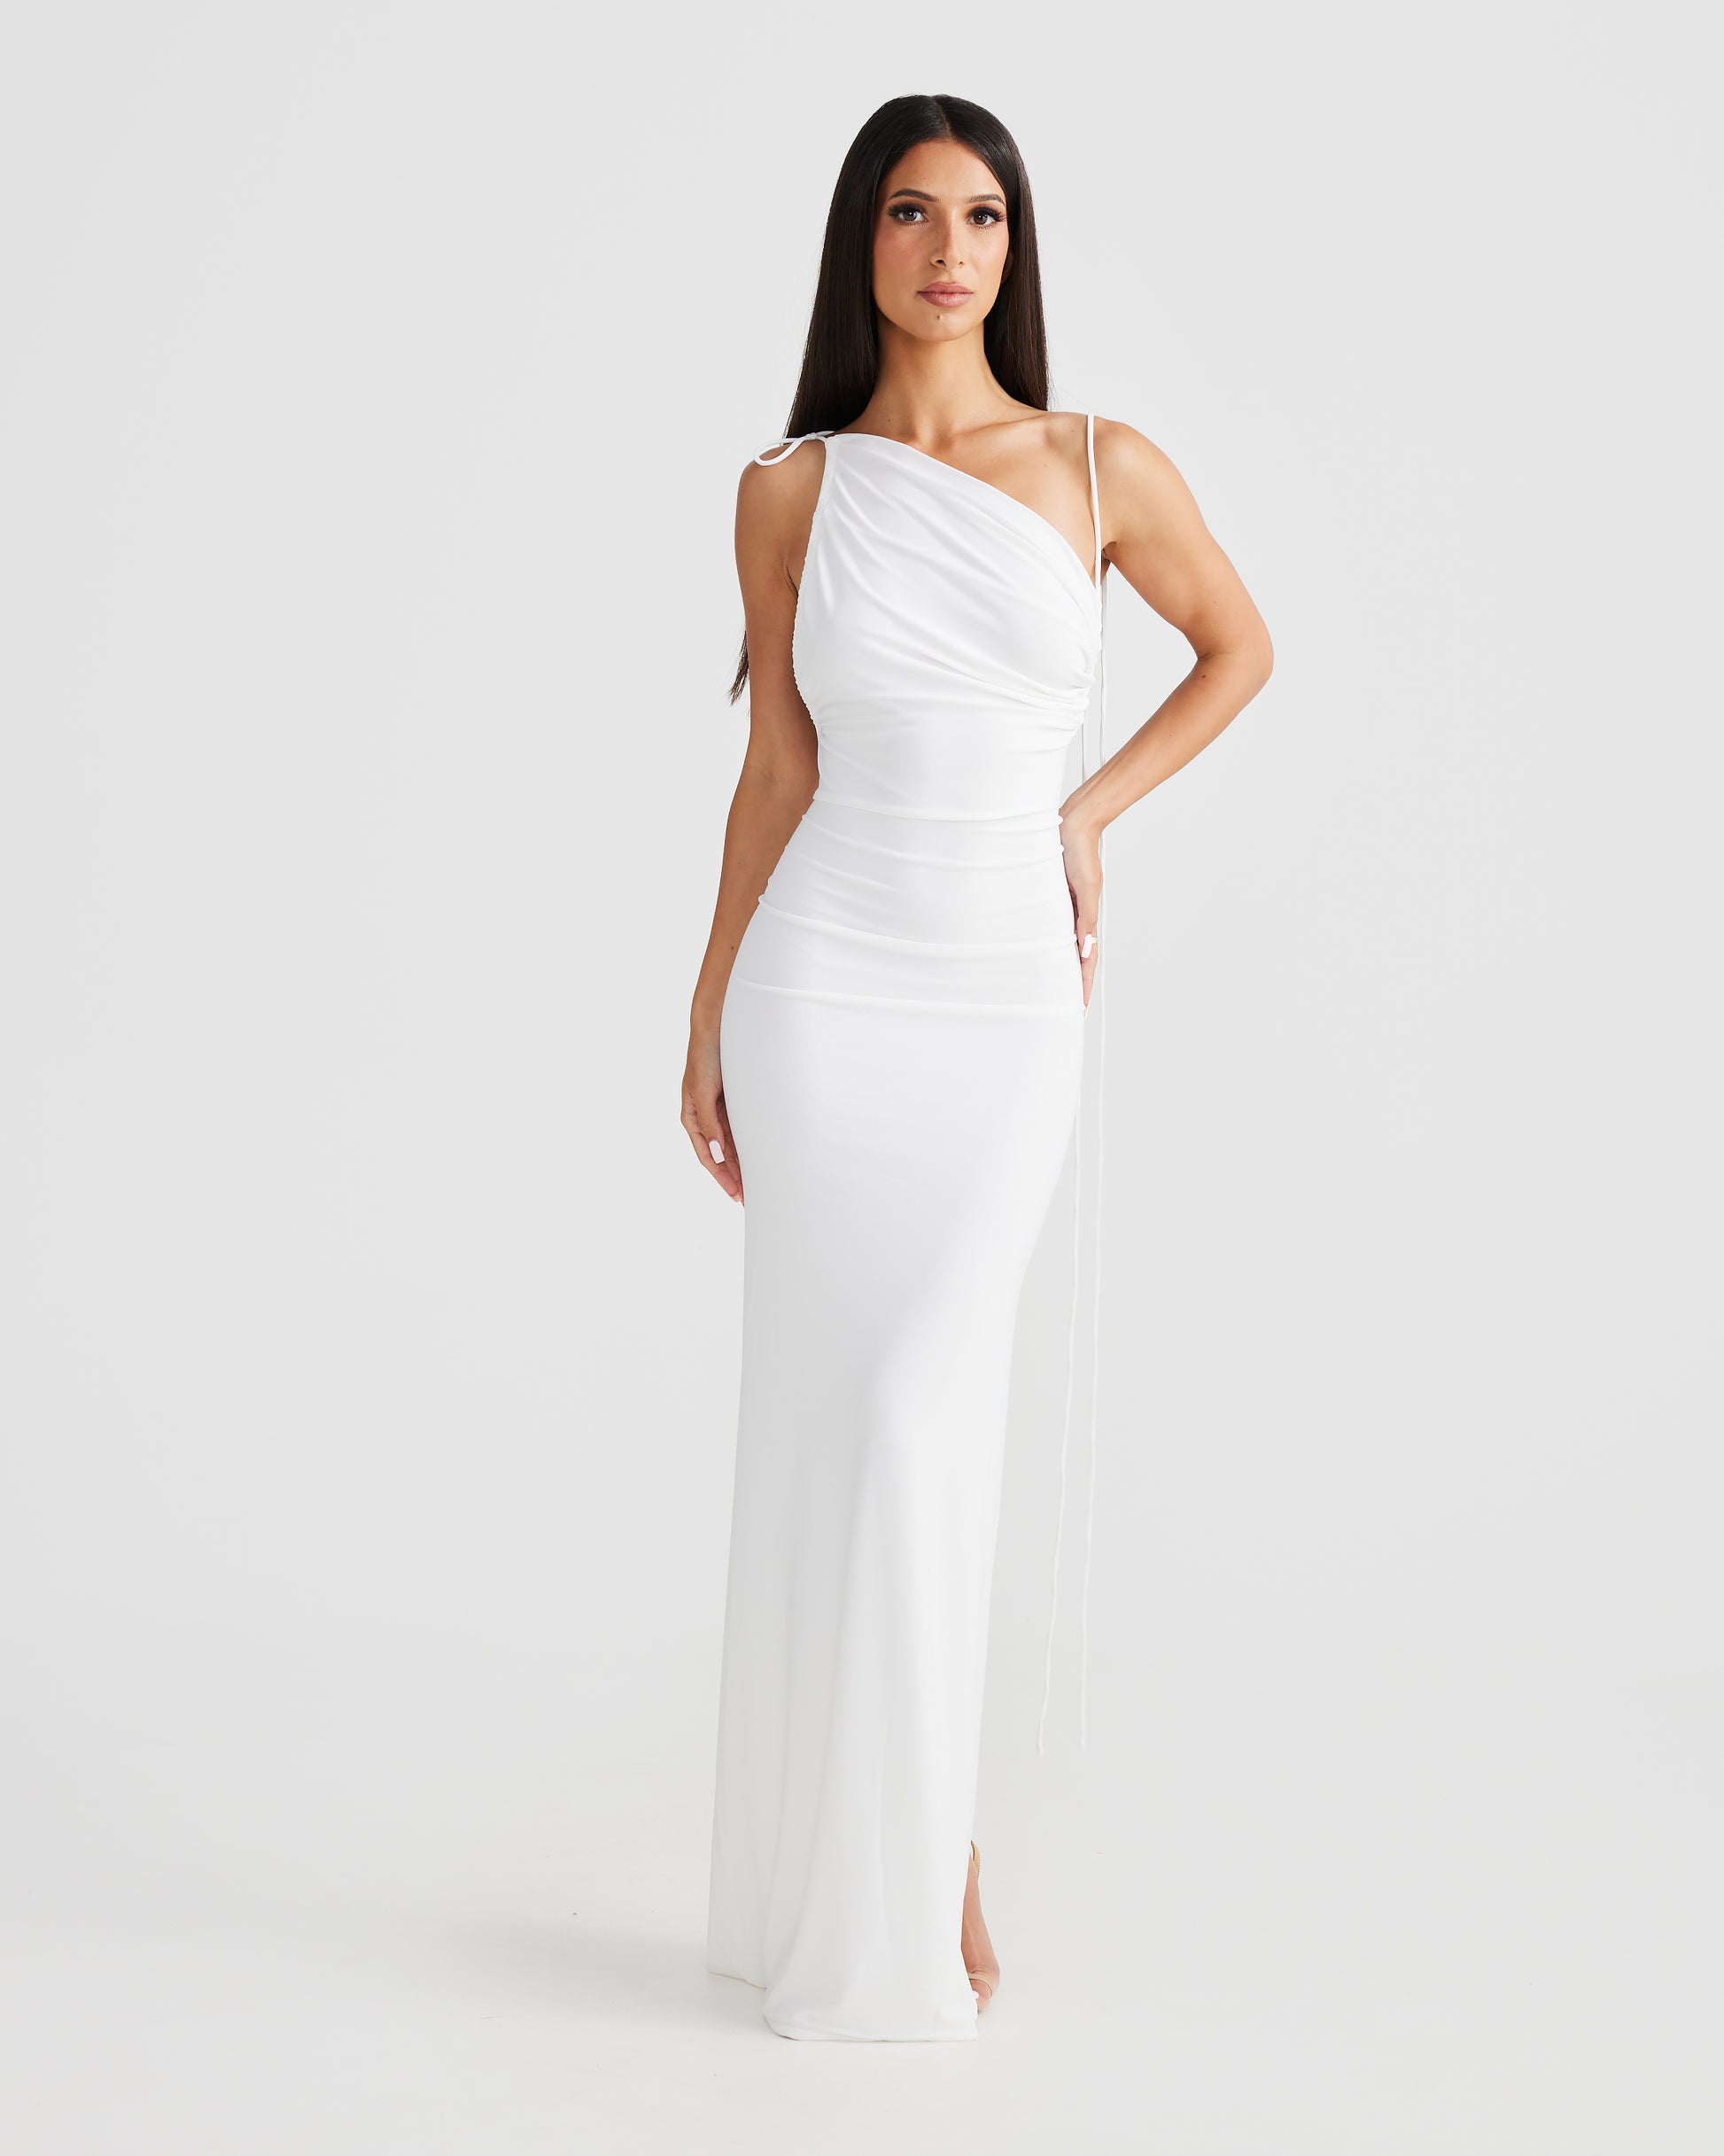 MÉLANI The Label NATALI White Backless Dress